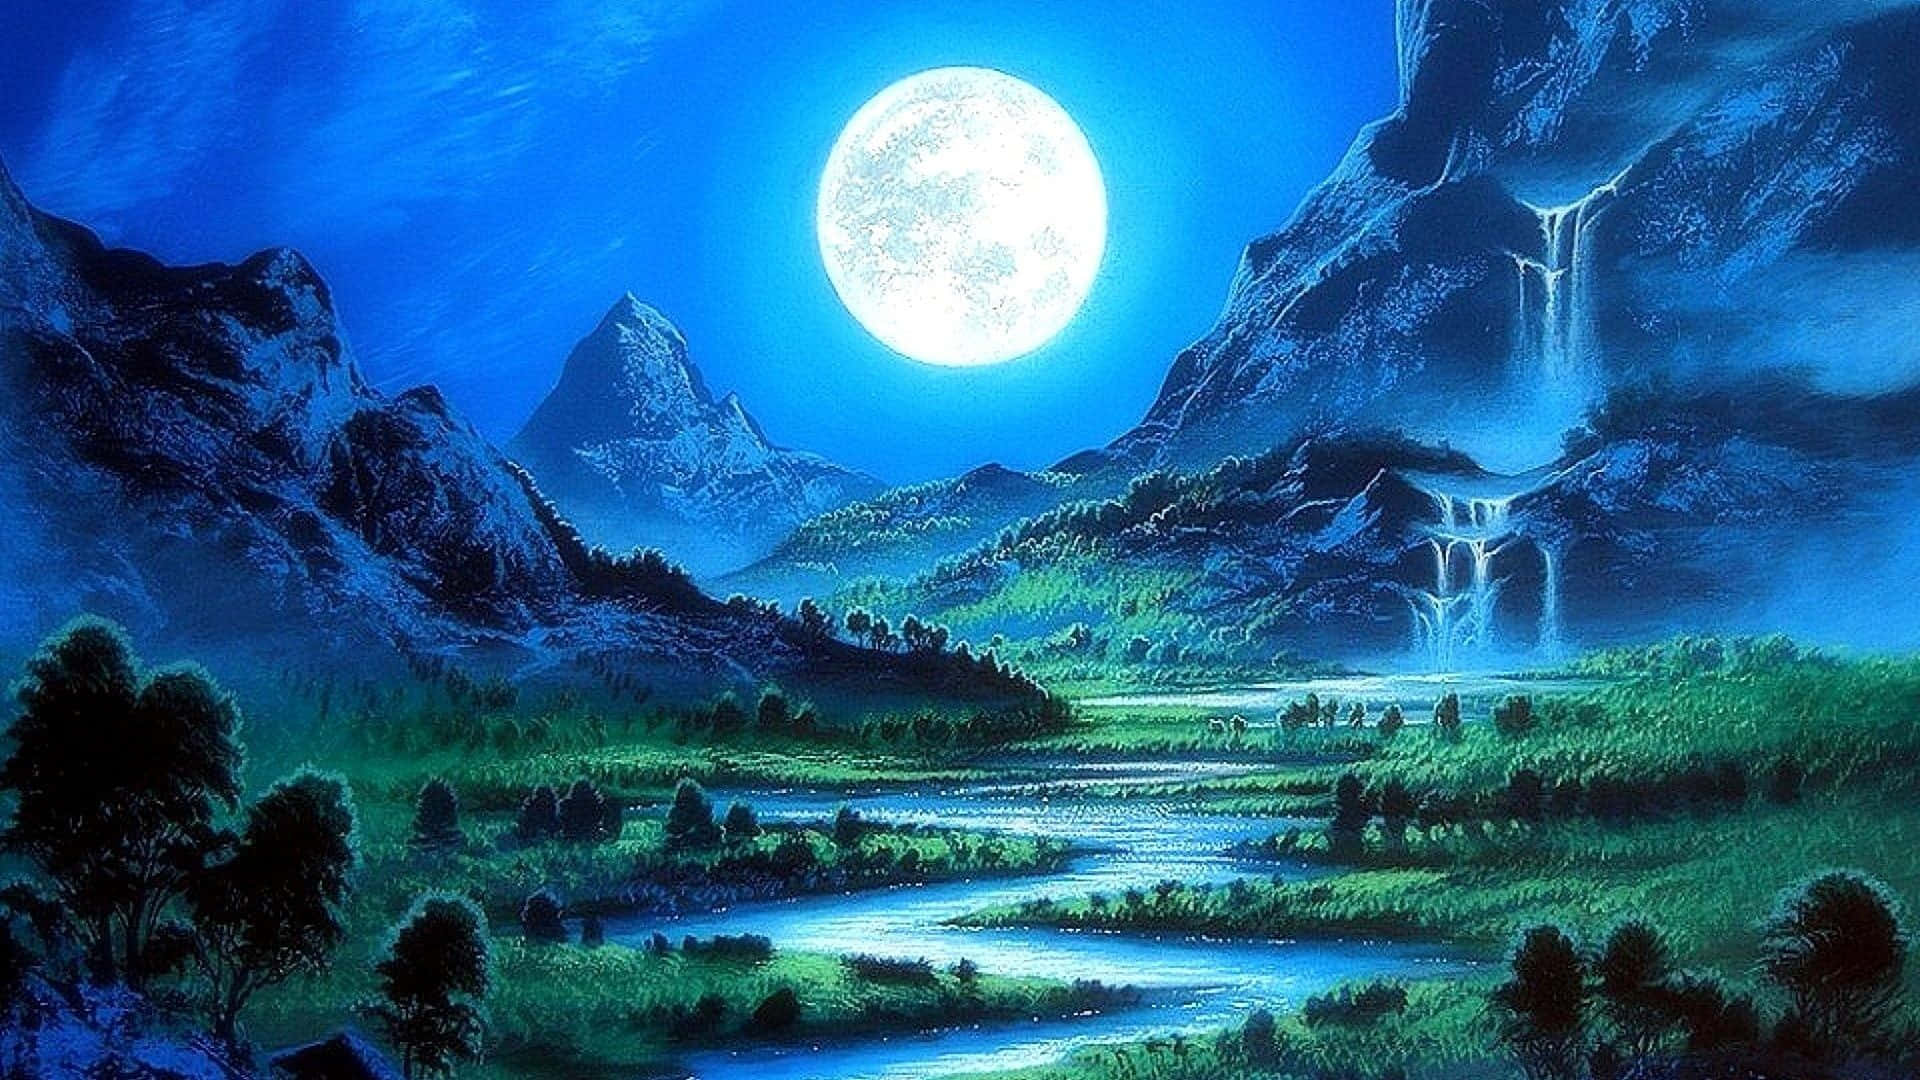 Enchanted Moonlit Landscape Wallpaper